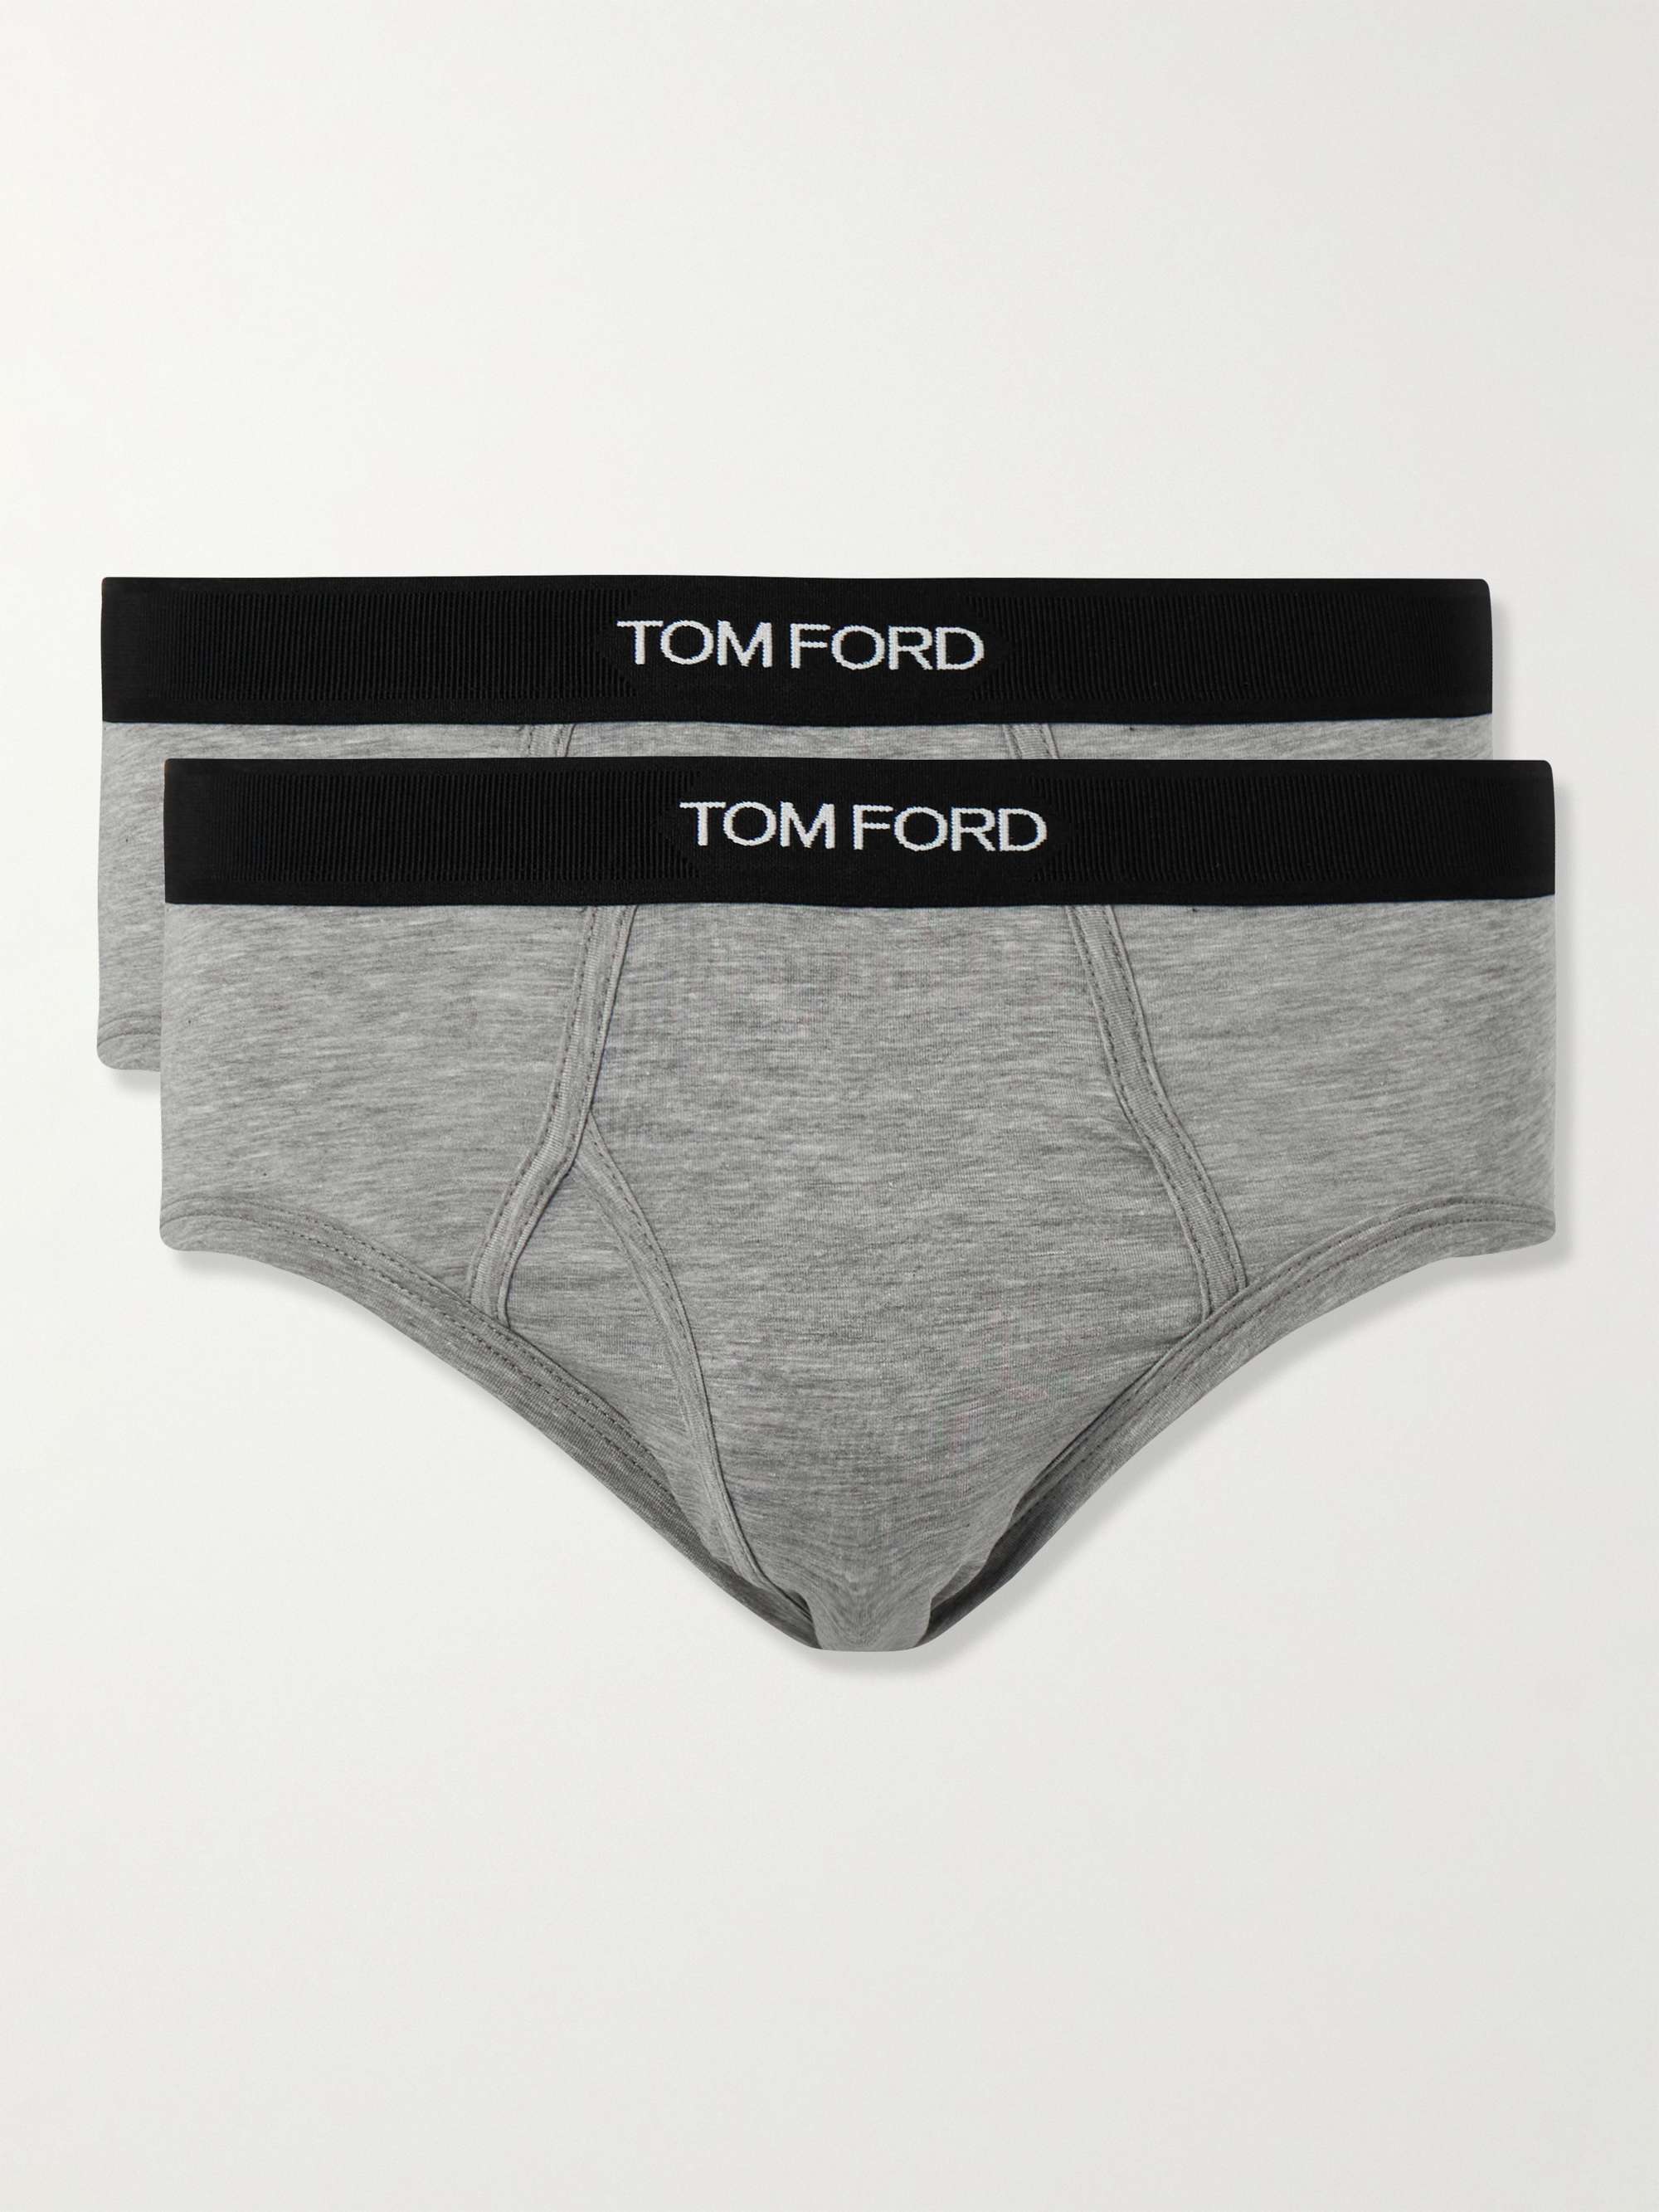 Silk Blend Boxer Briefs in Black - Tom Ford